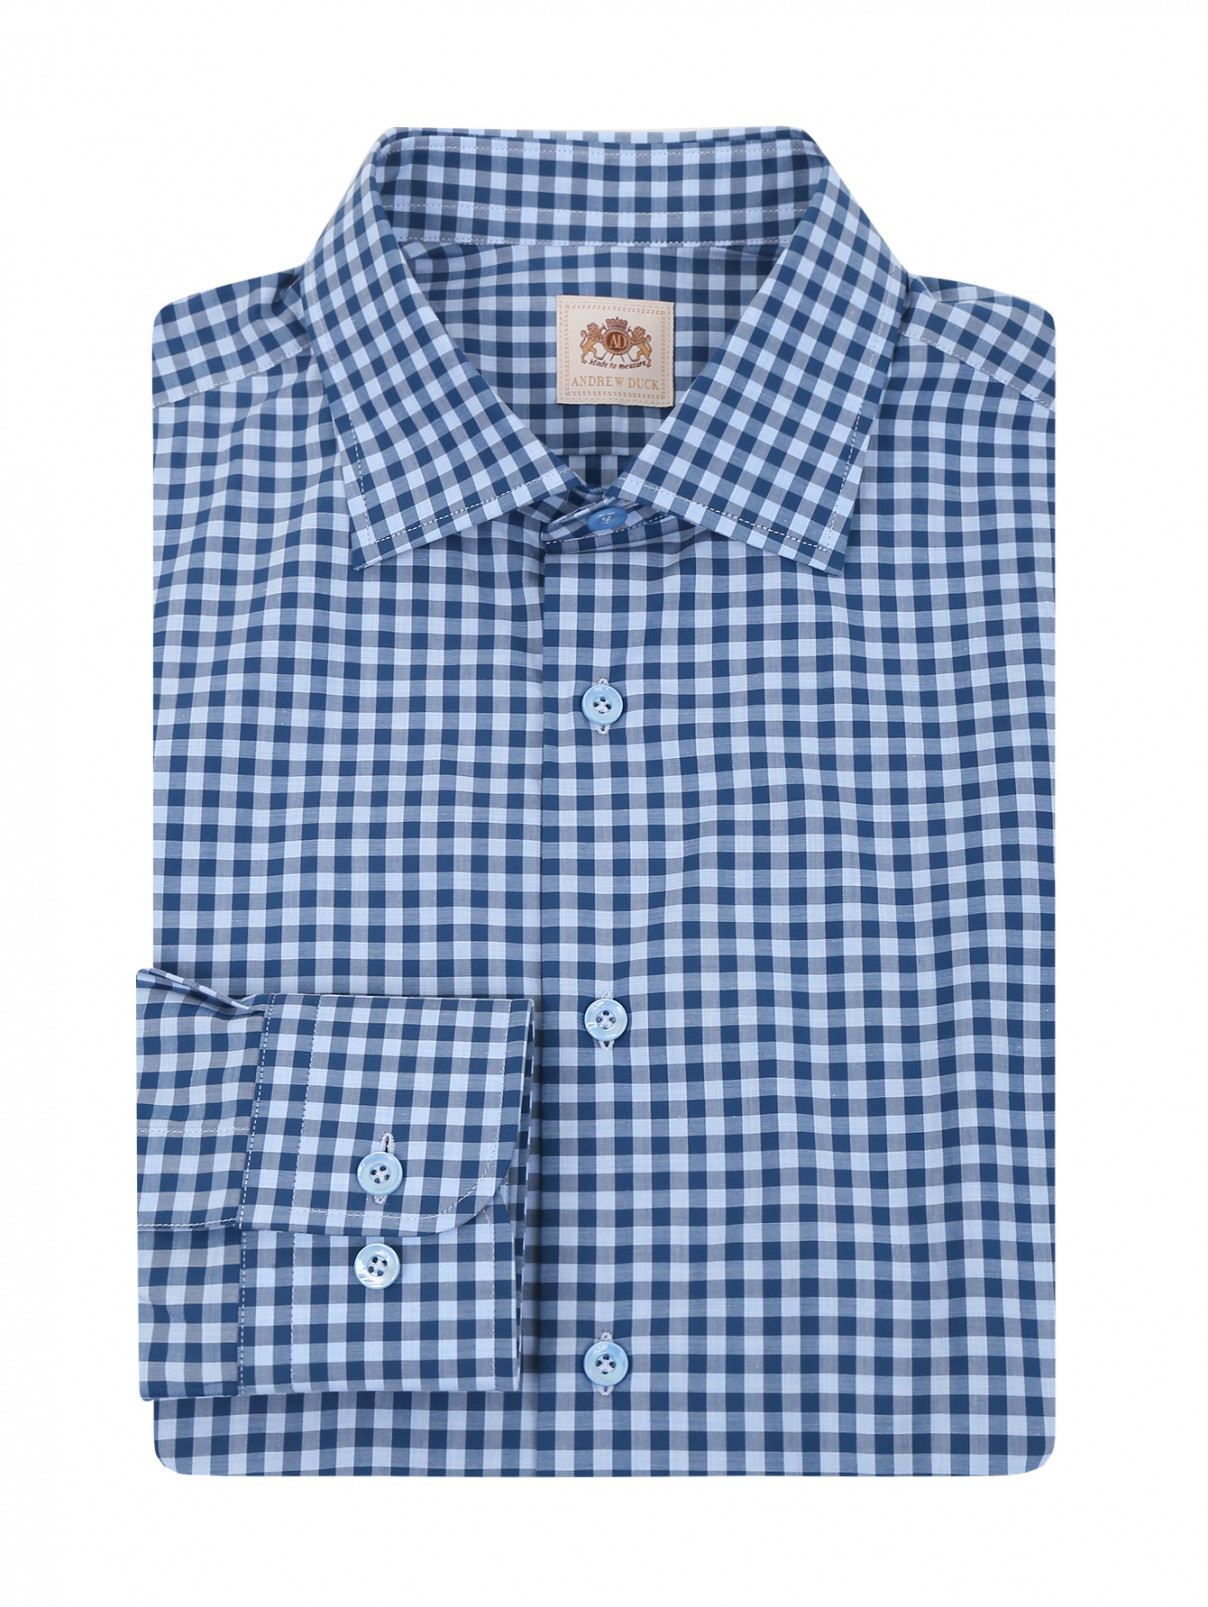 Рубашка из хлопка с узором "клетка" Andrew Duck  –  Общий вид  – Цвет:  Узор